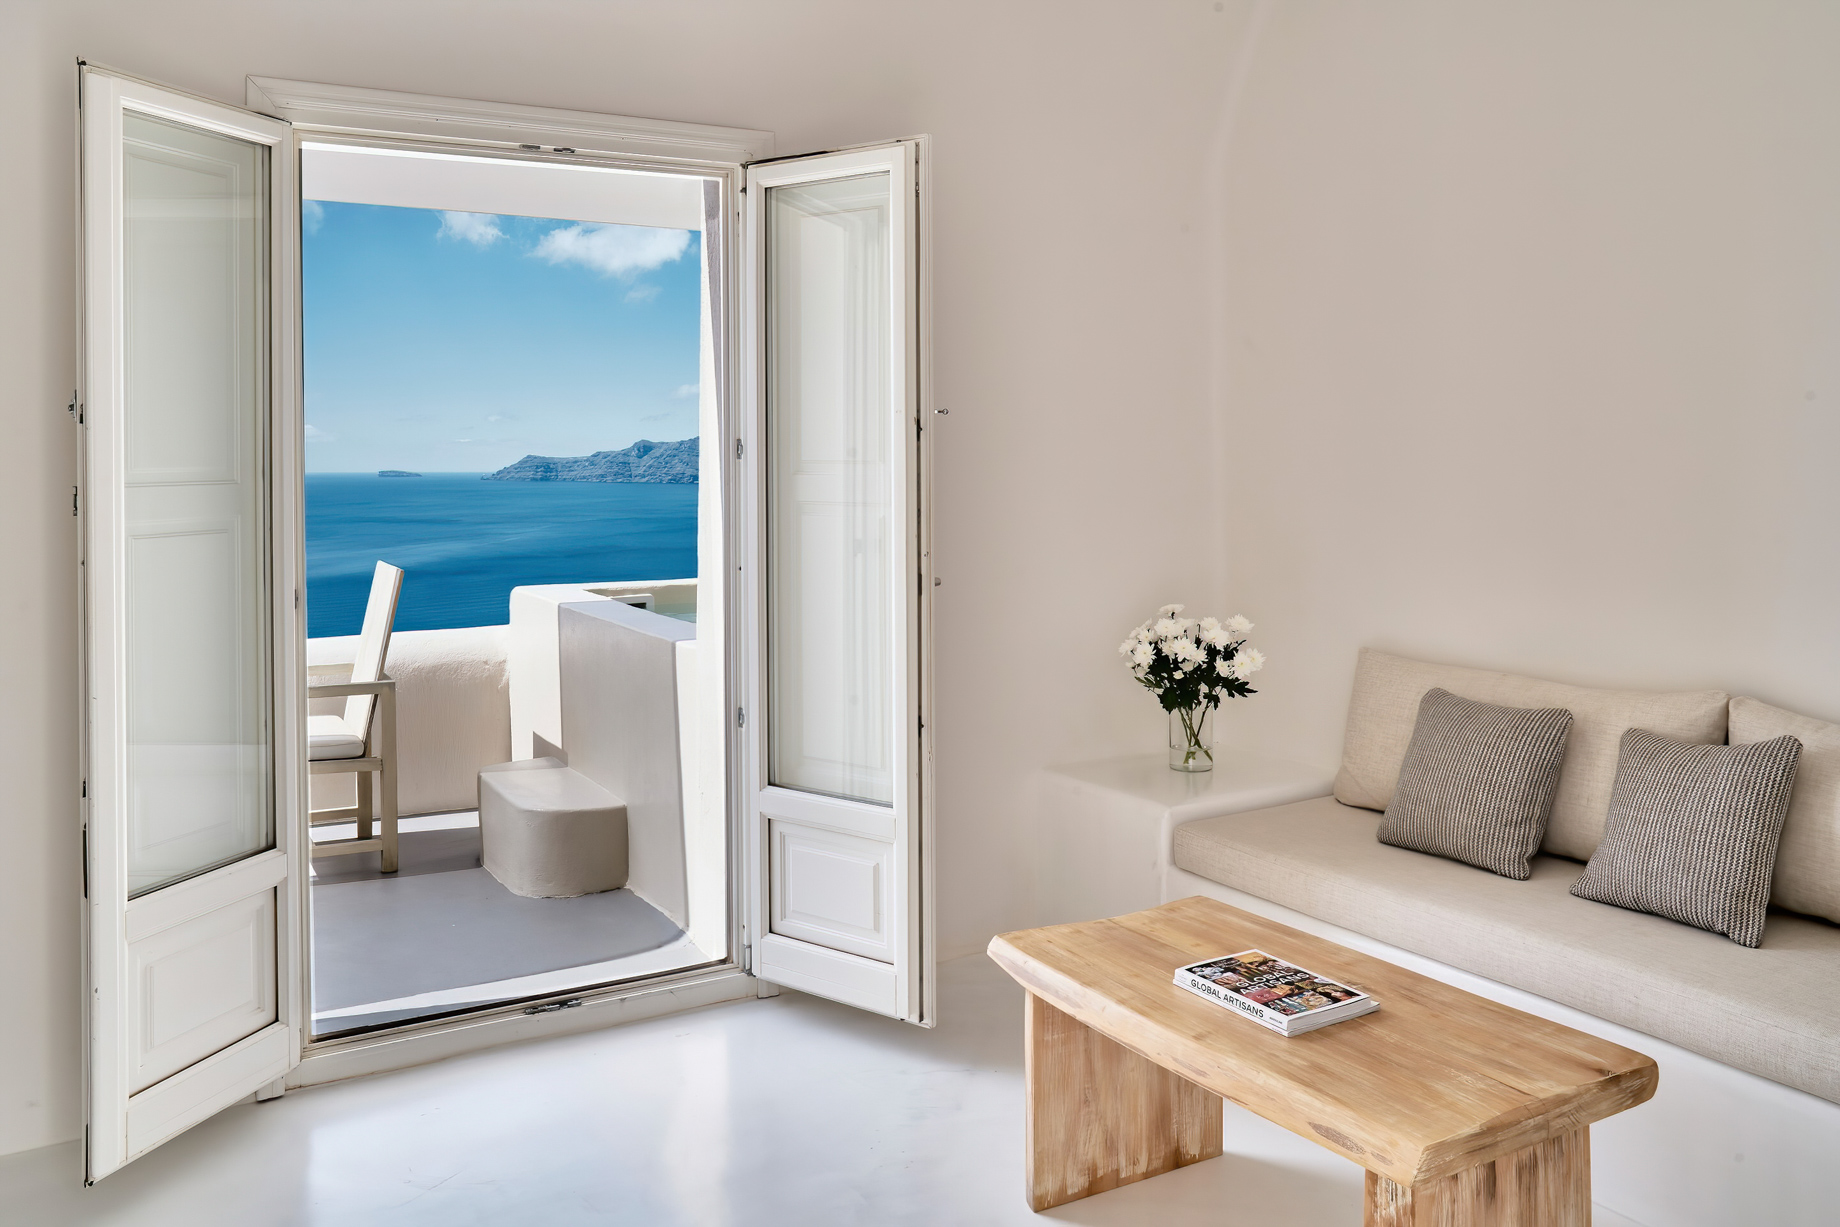 Mystique Hotel Santorini – Oia, Santorini Island, Greece – Spiritual Suite Patio View